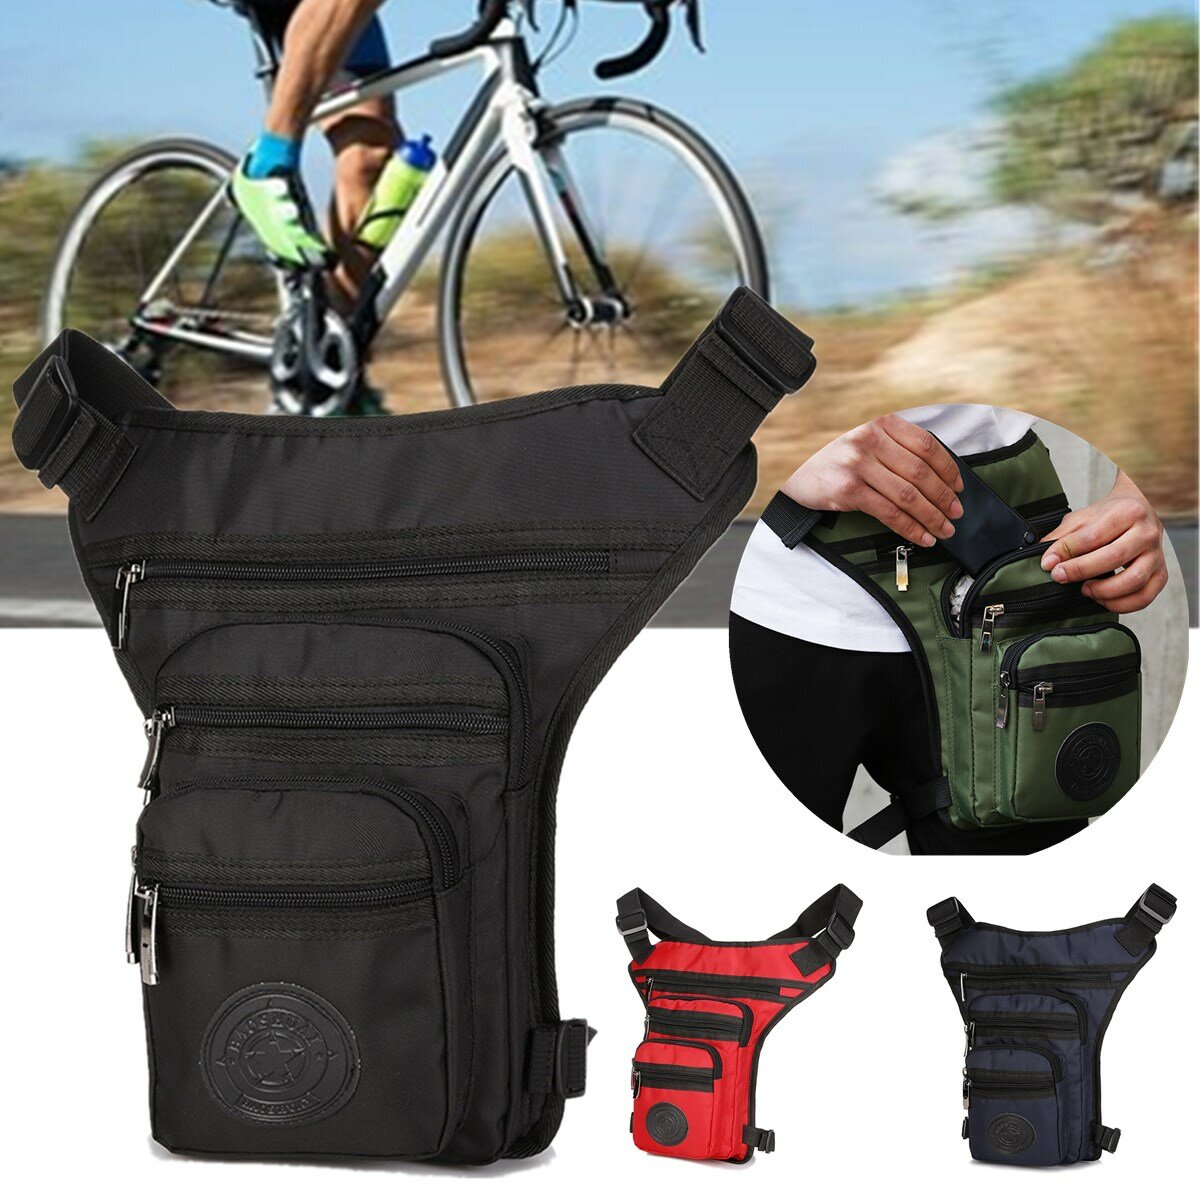 17x8x31cm Waist Leg Bag Waterproof Bike Hip Belt Pack Pouch Cycling Bicycle